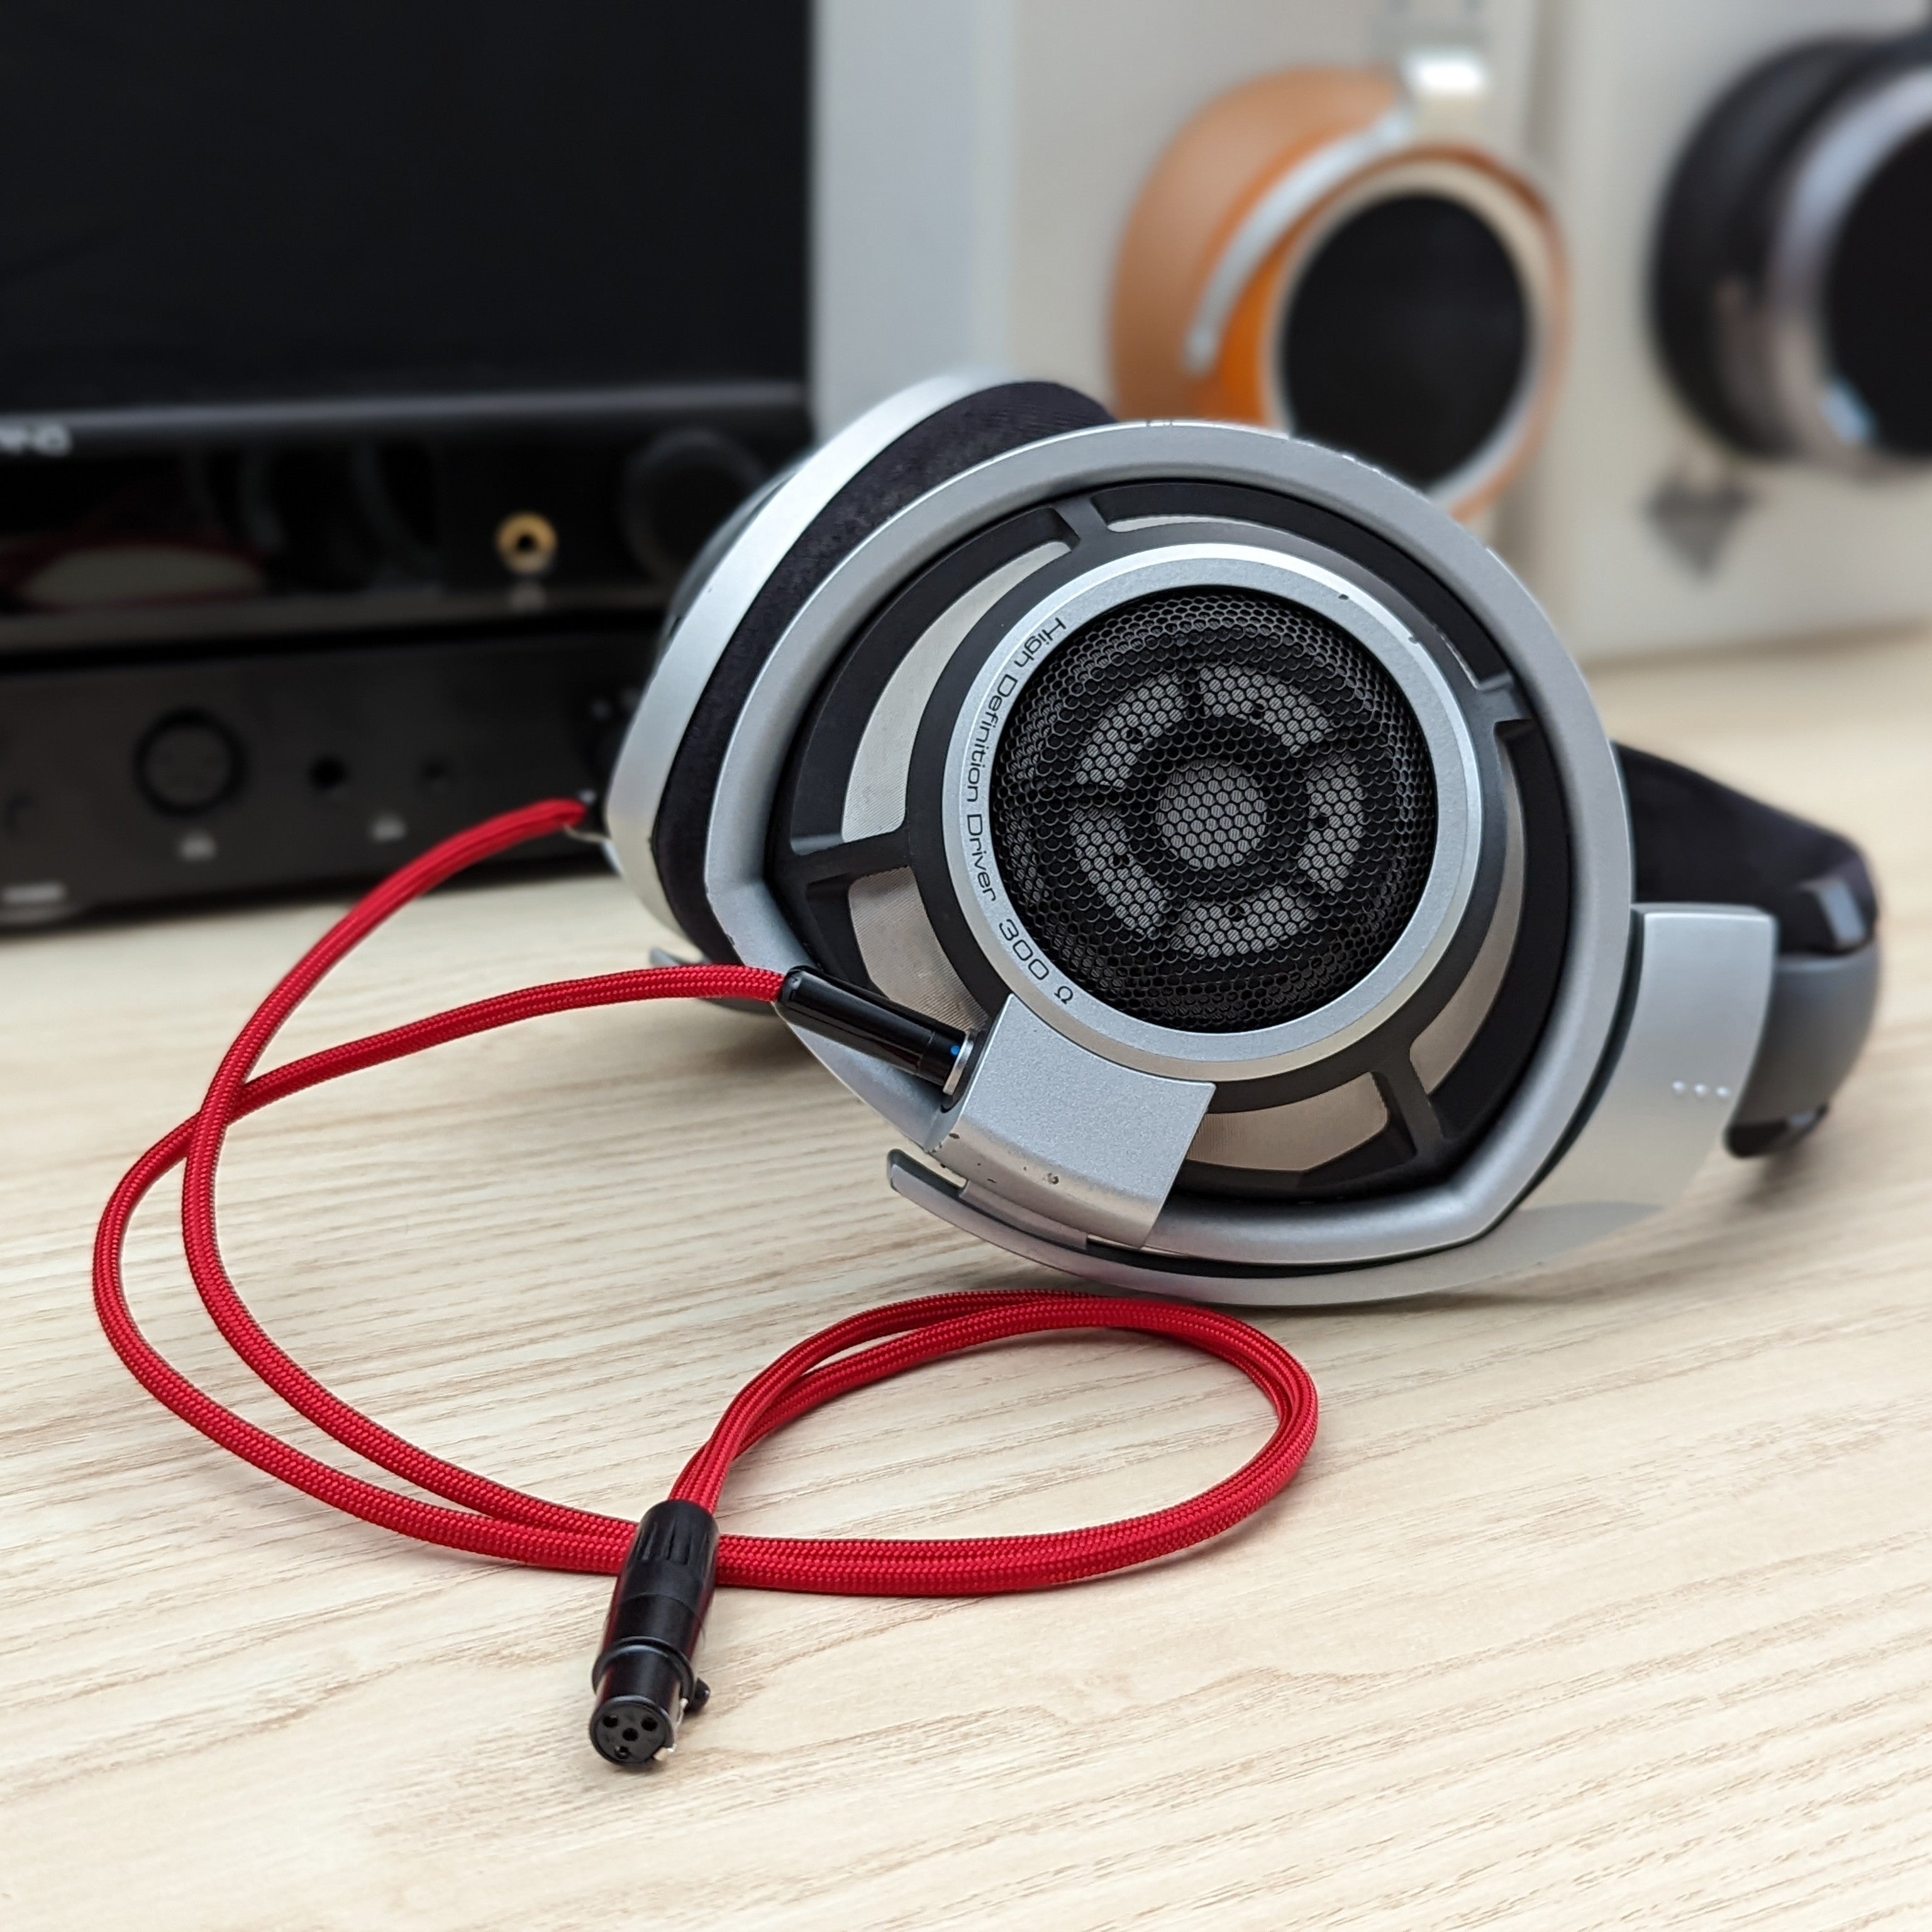 HC-13-Split: Dual HD800 series headphone cable for Sennheiser headphones